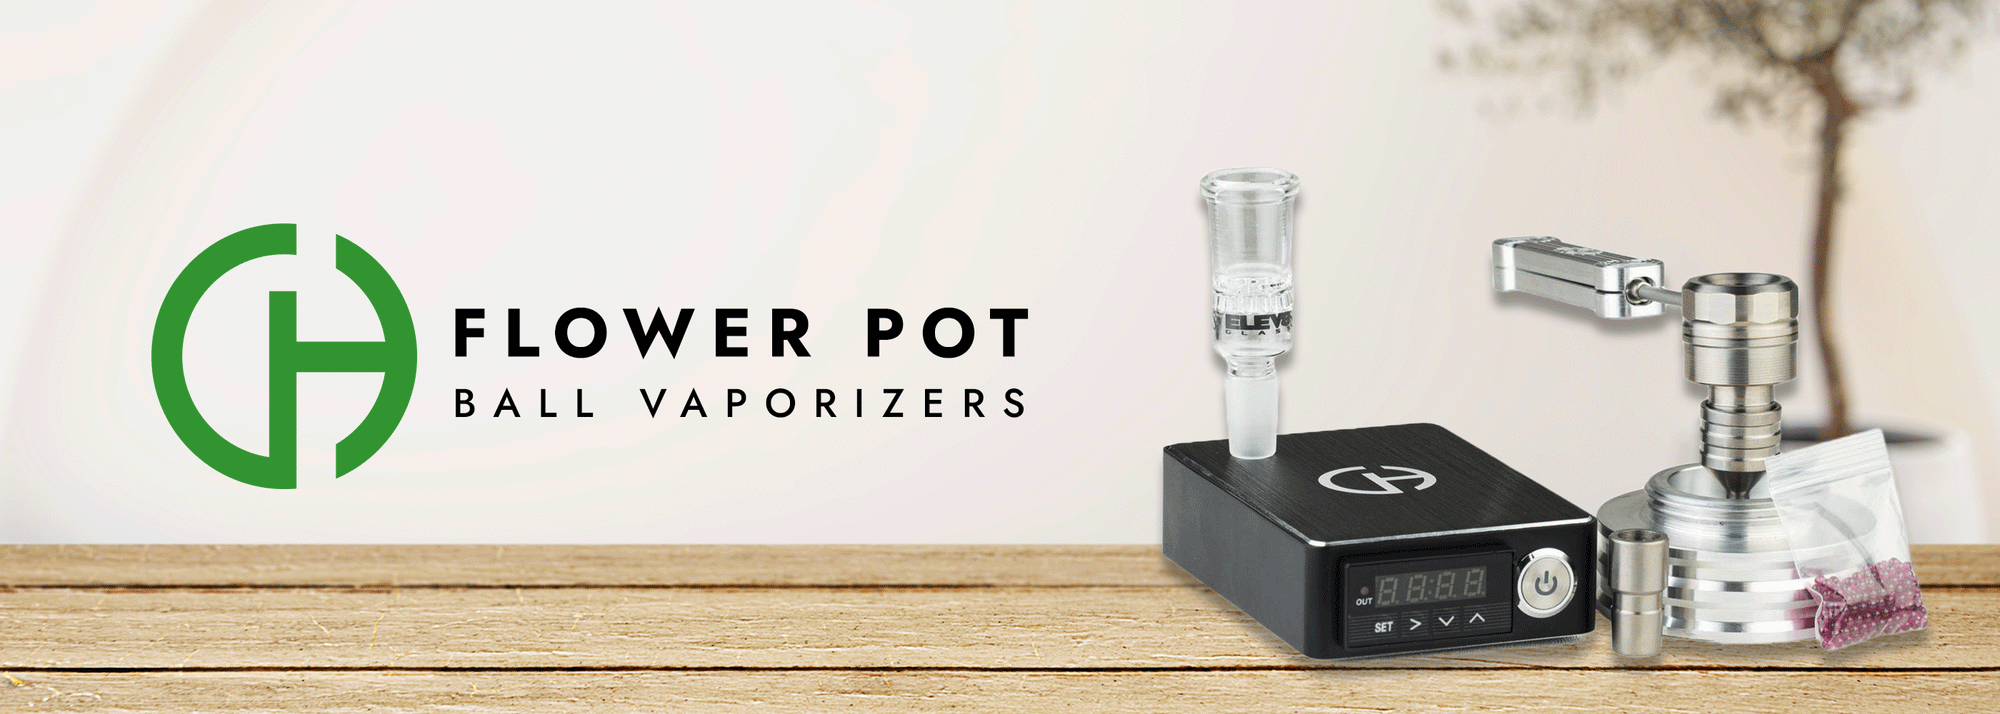 Flowerpot Vaporizer | Wick and Wire Co, Melbourne Australia